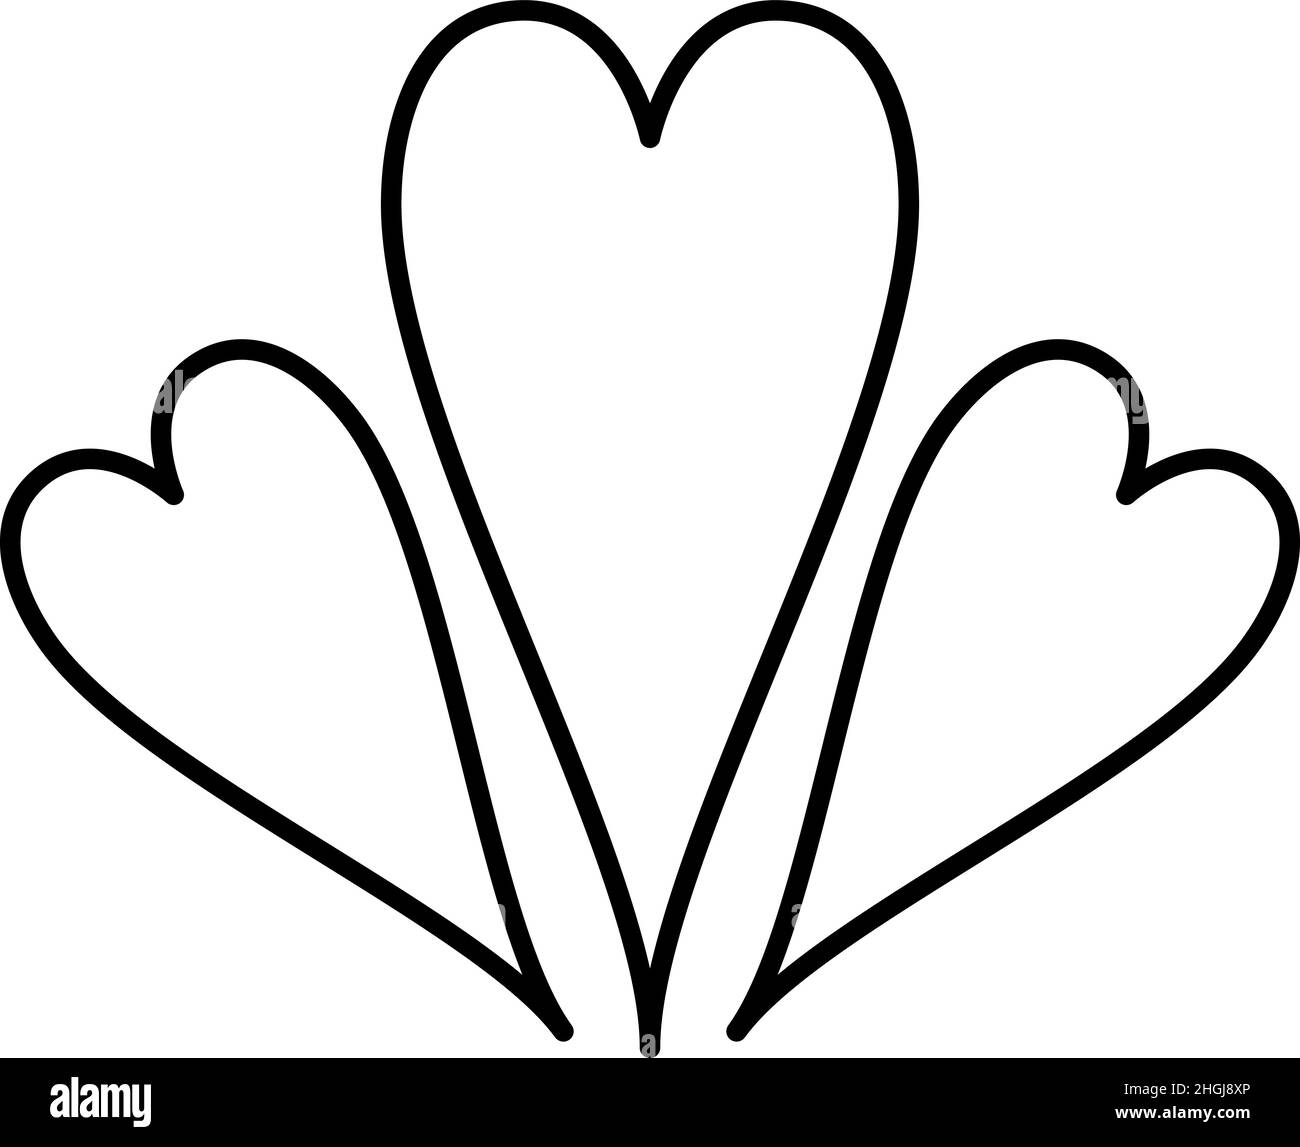 three-heart-outline-icon-vector-stock-vector-image-art-alamy